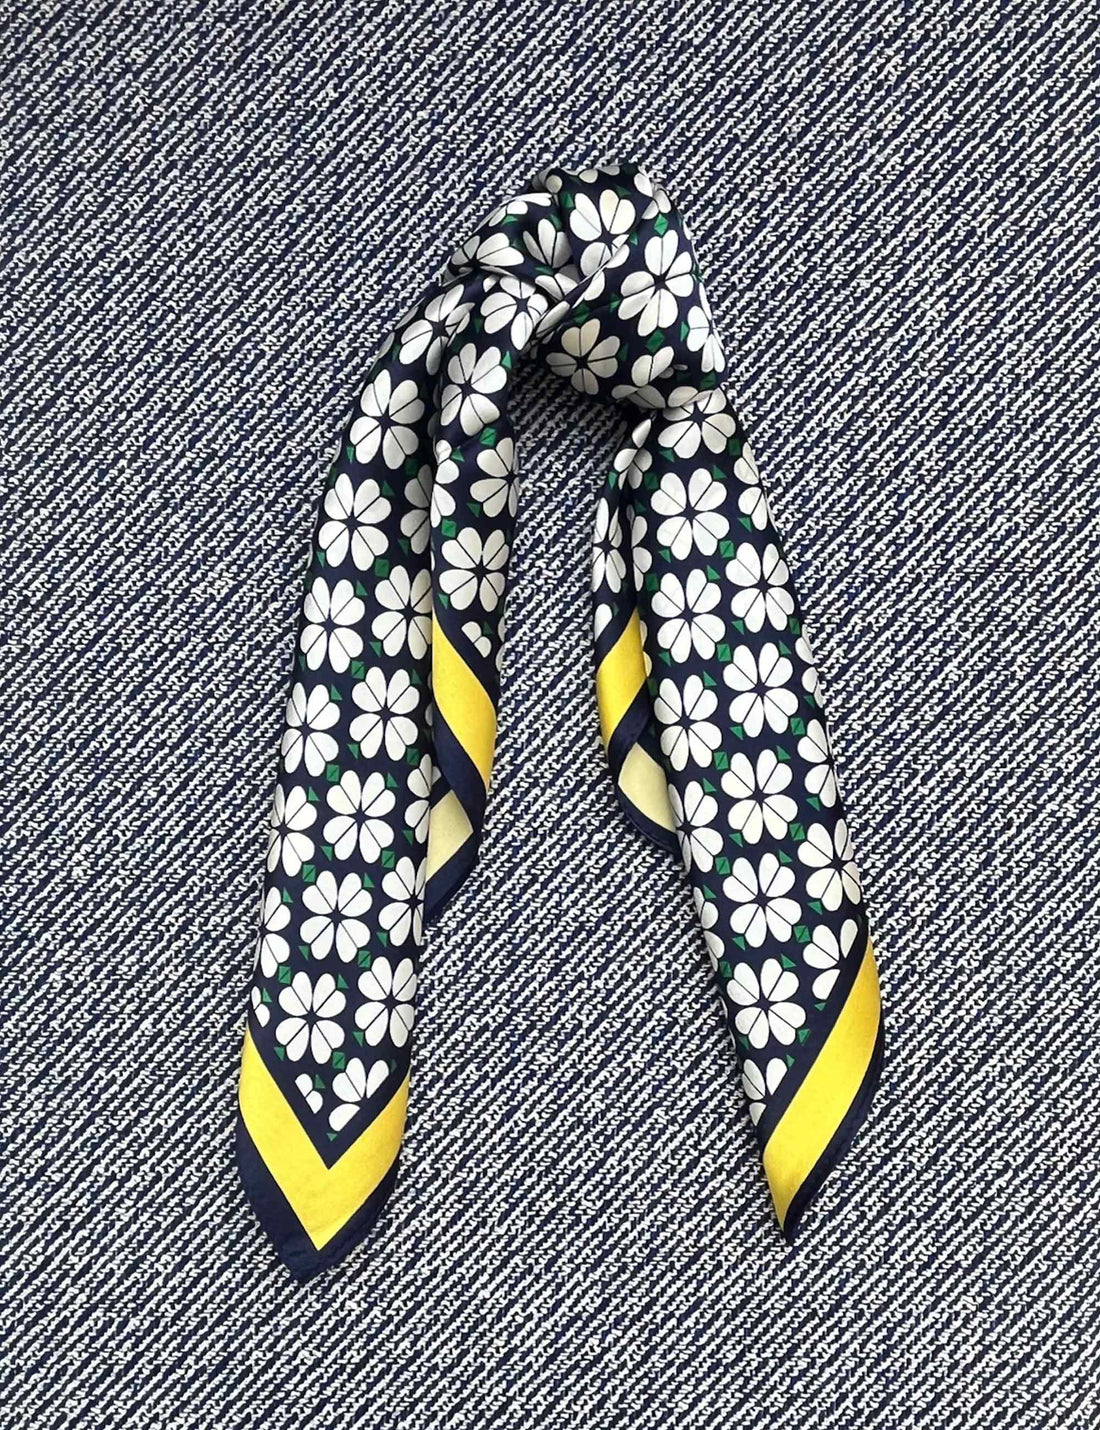 Silk scarf navy/white graphic floral print